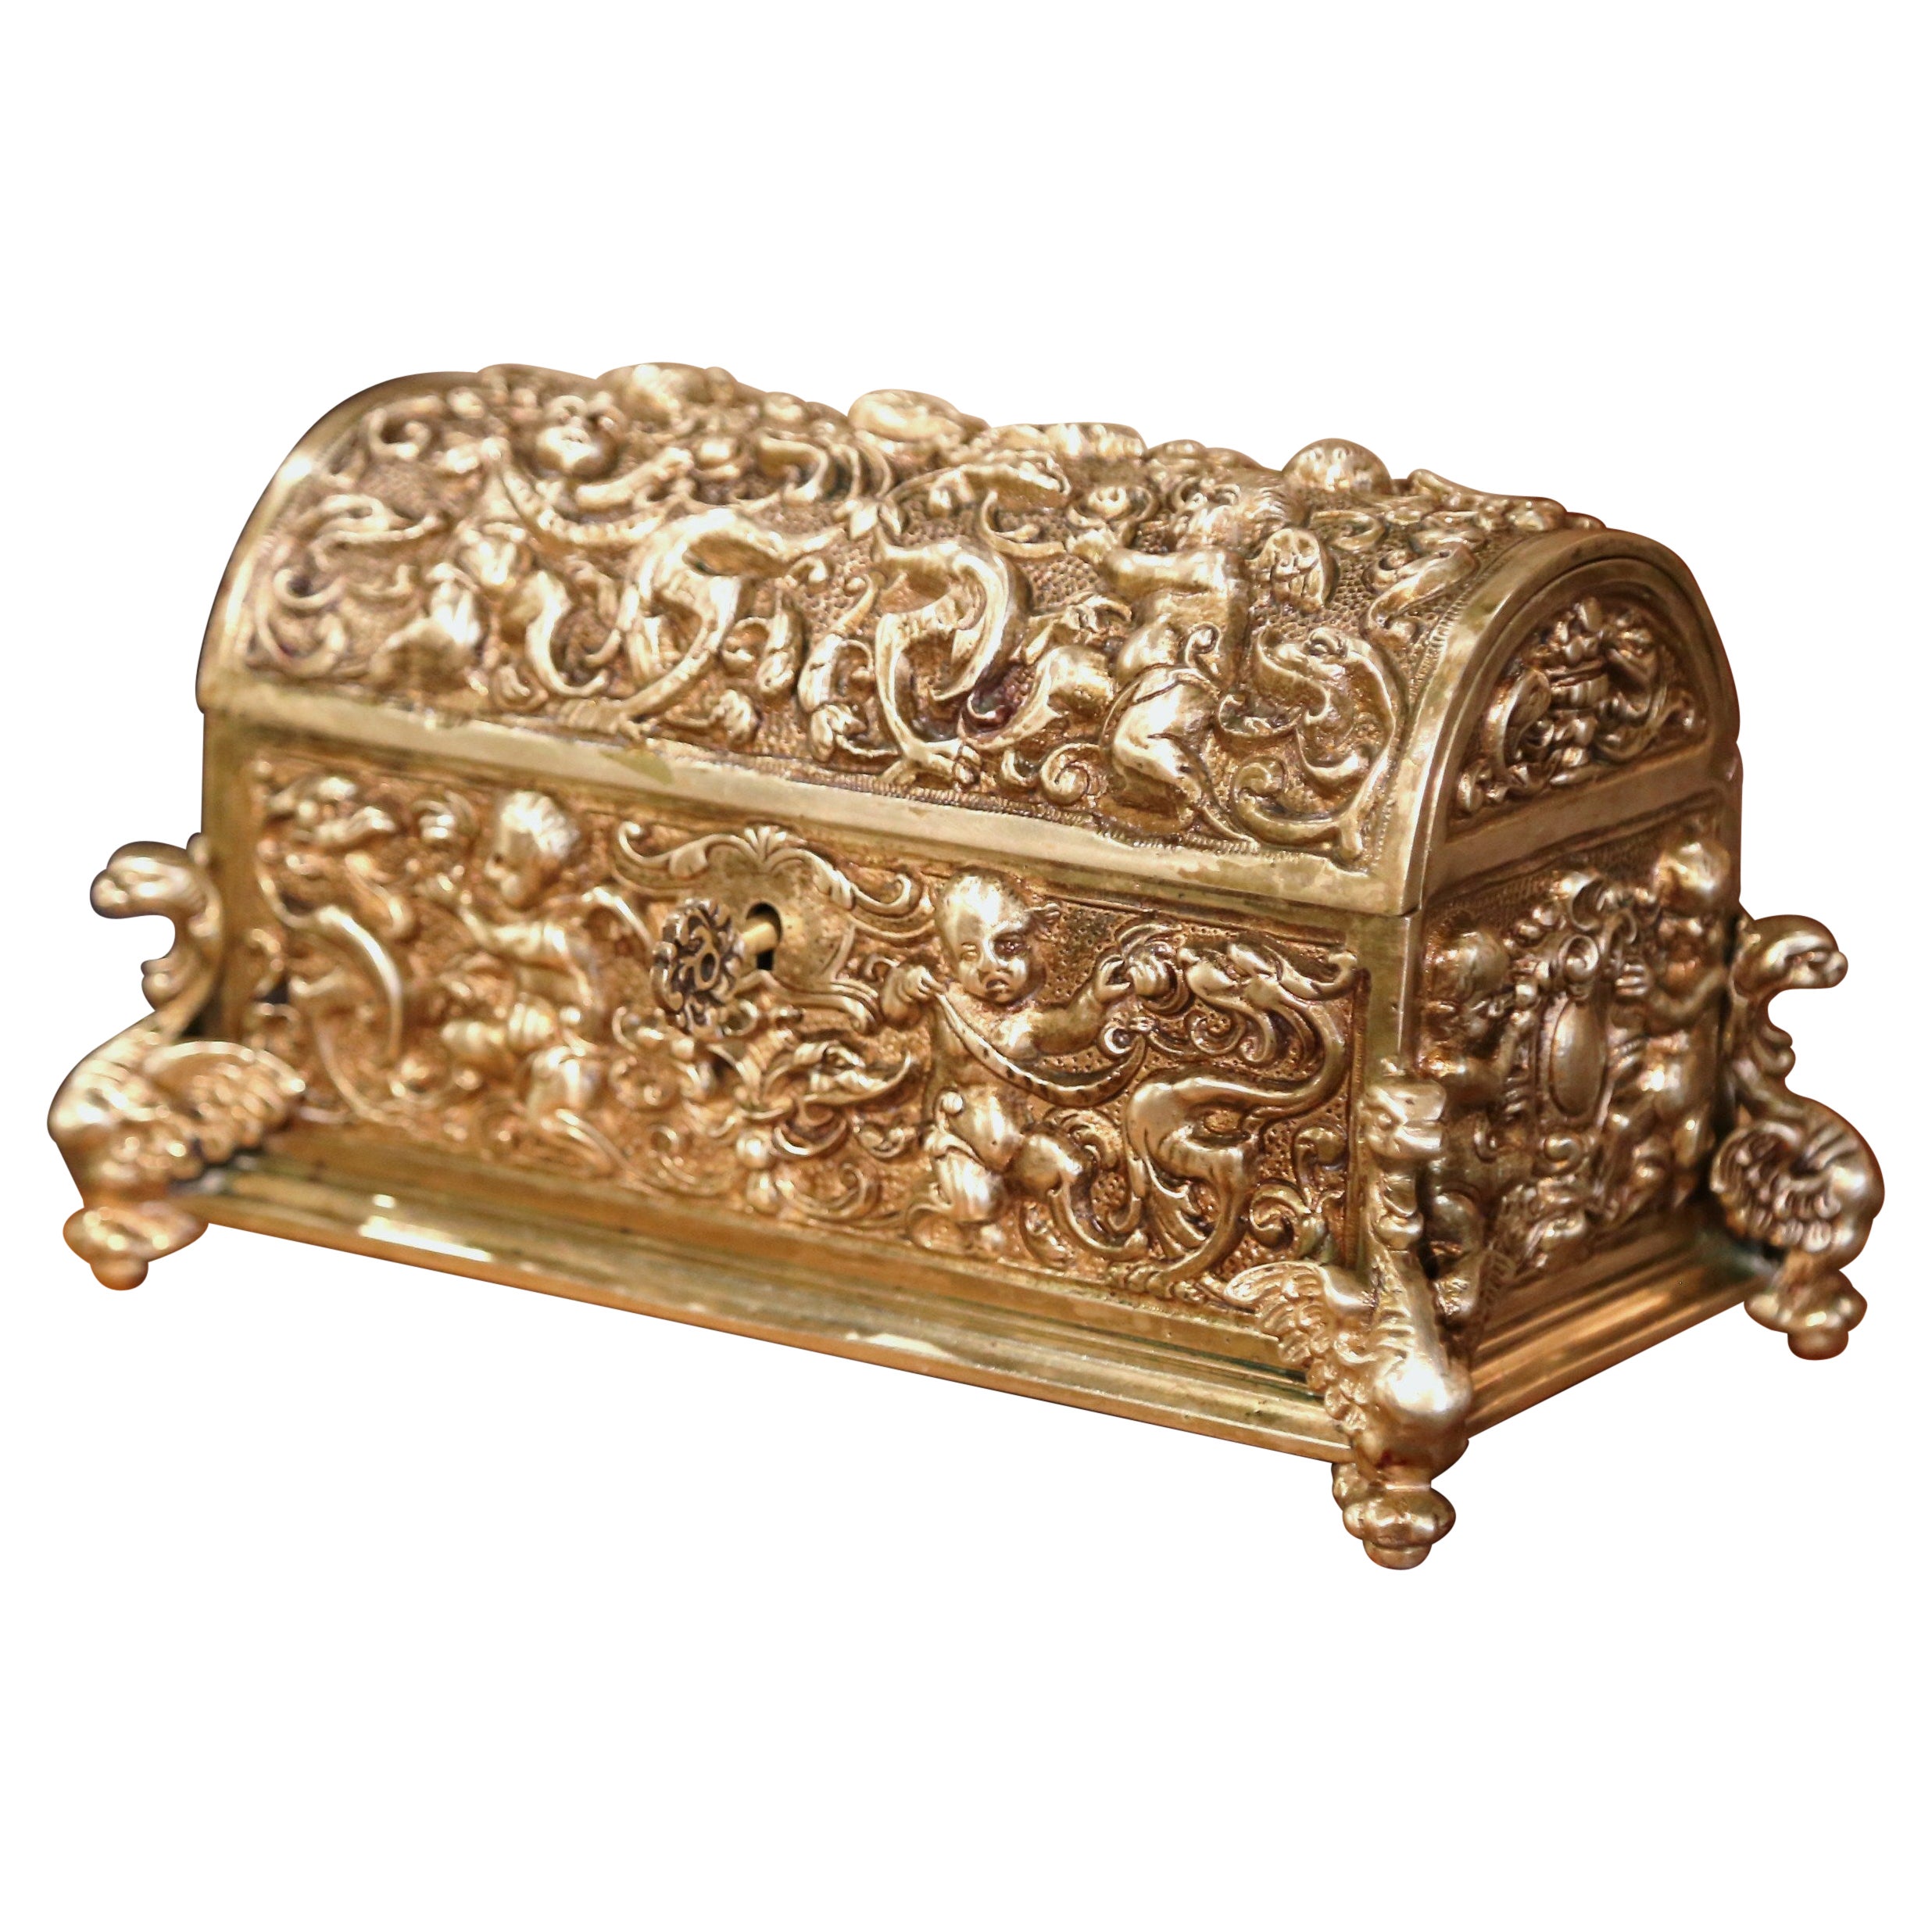 19th Century French Gothic Bronze Doré Jewelry Box with Repousse Cherub Motifs